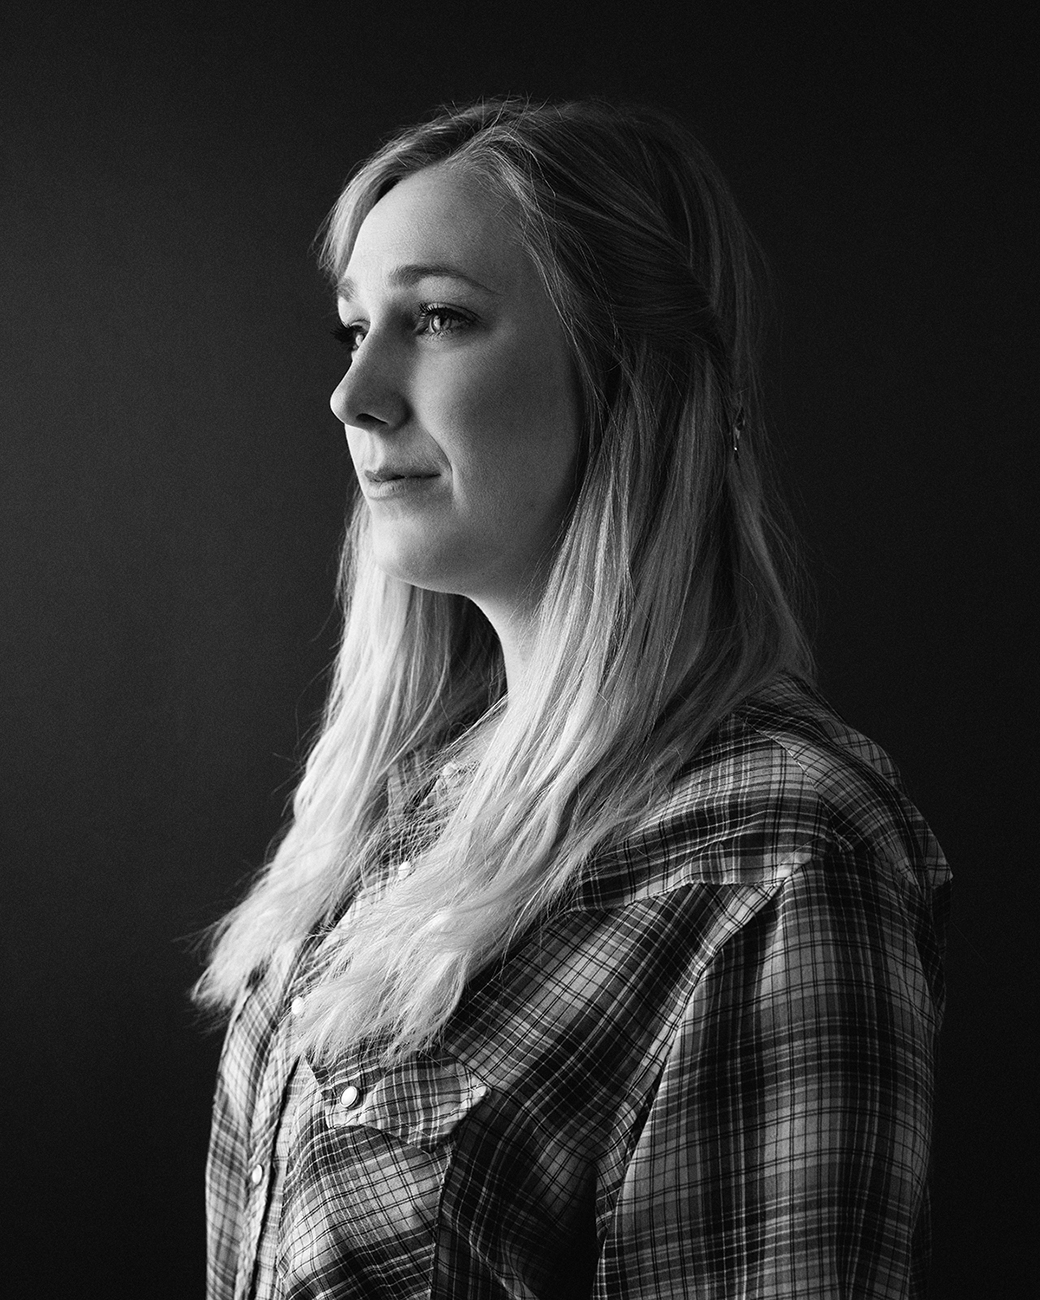 Brooke Smith, photographed by Editorial and Portrait photographer, Josh Huskin, in San Antonio, Texas. 